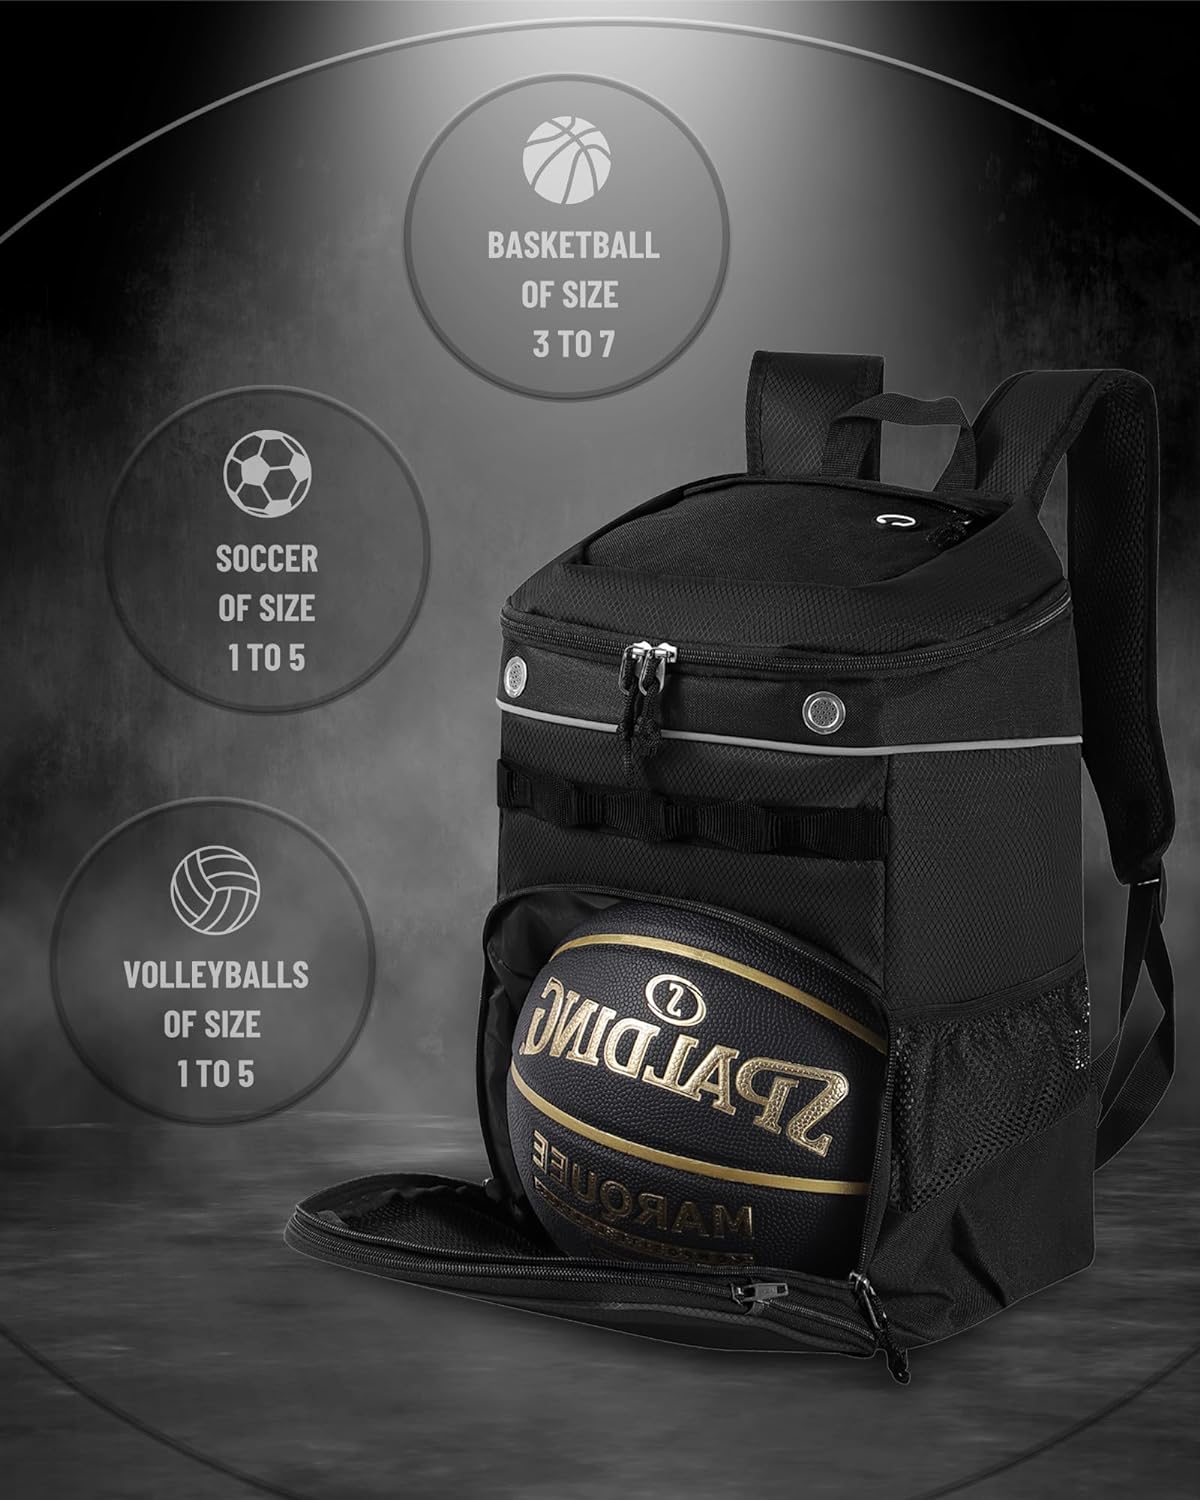 Trailkicker 30L Basketball Backpack